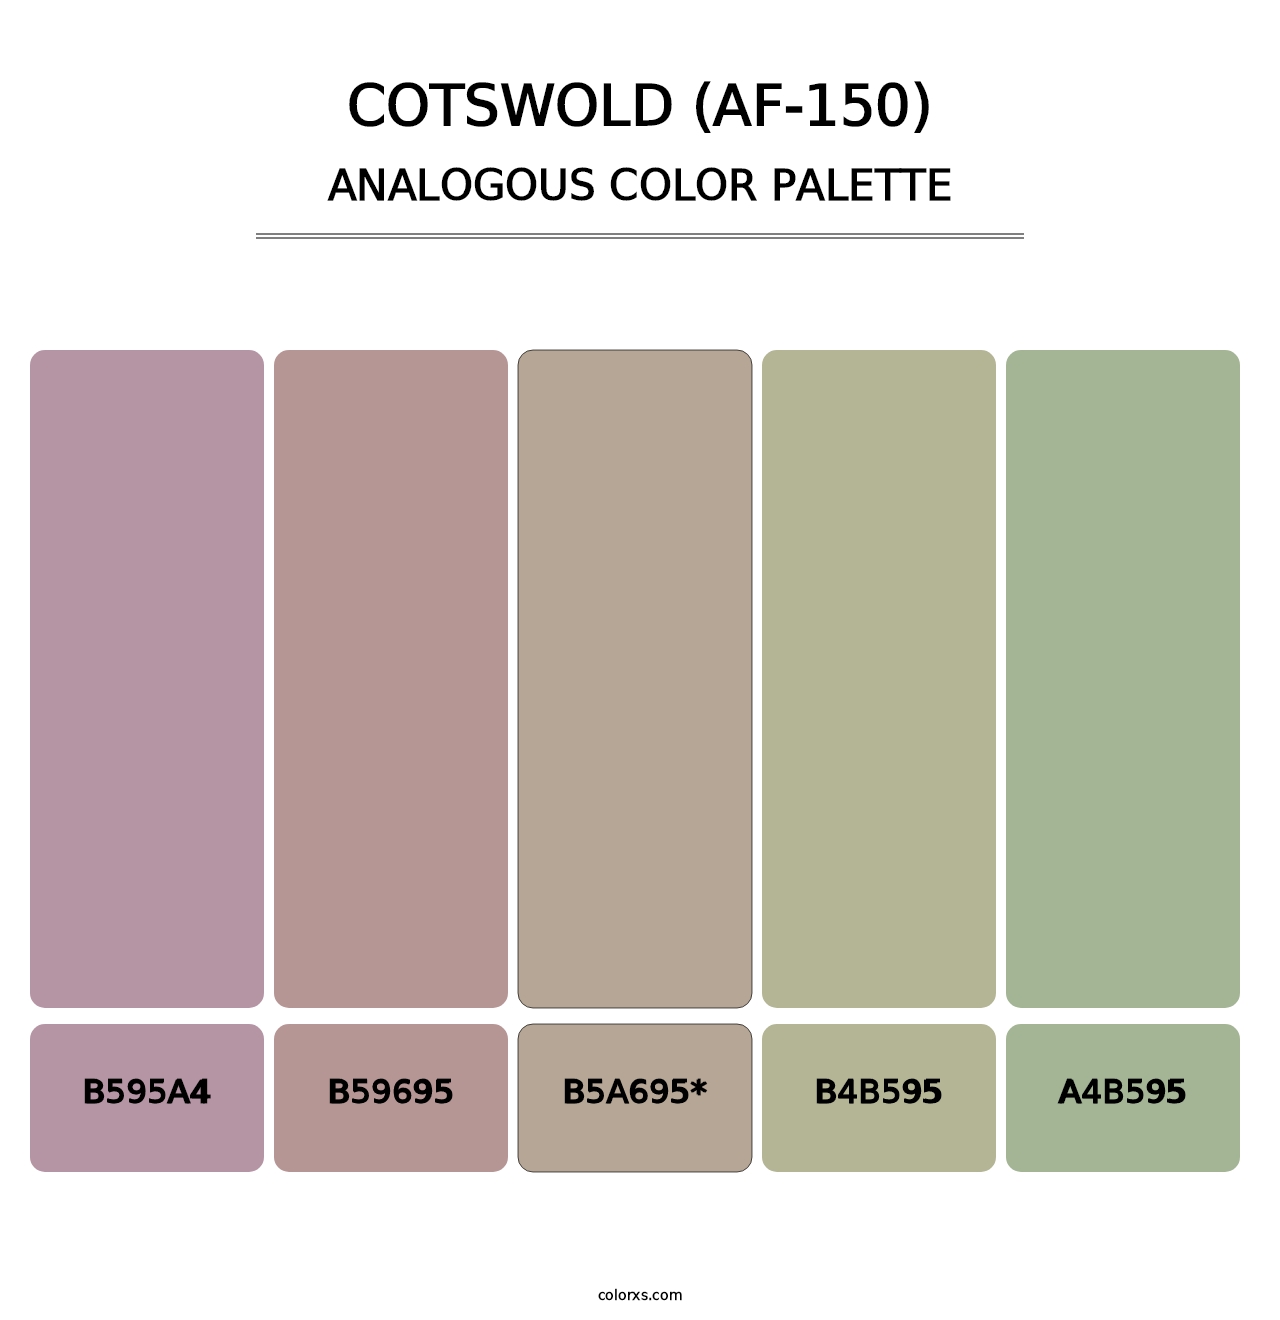 Cotswold (AF-150) - Analogous Color Palette